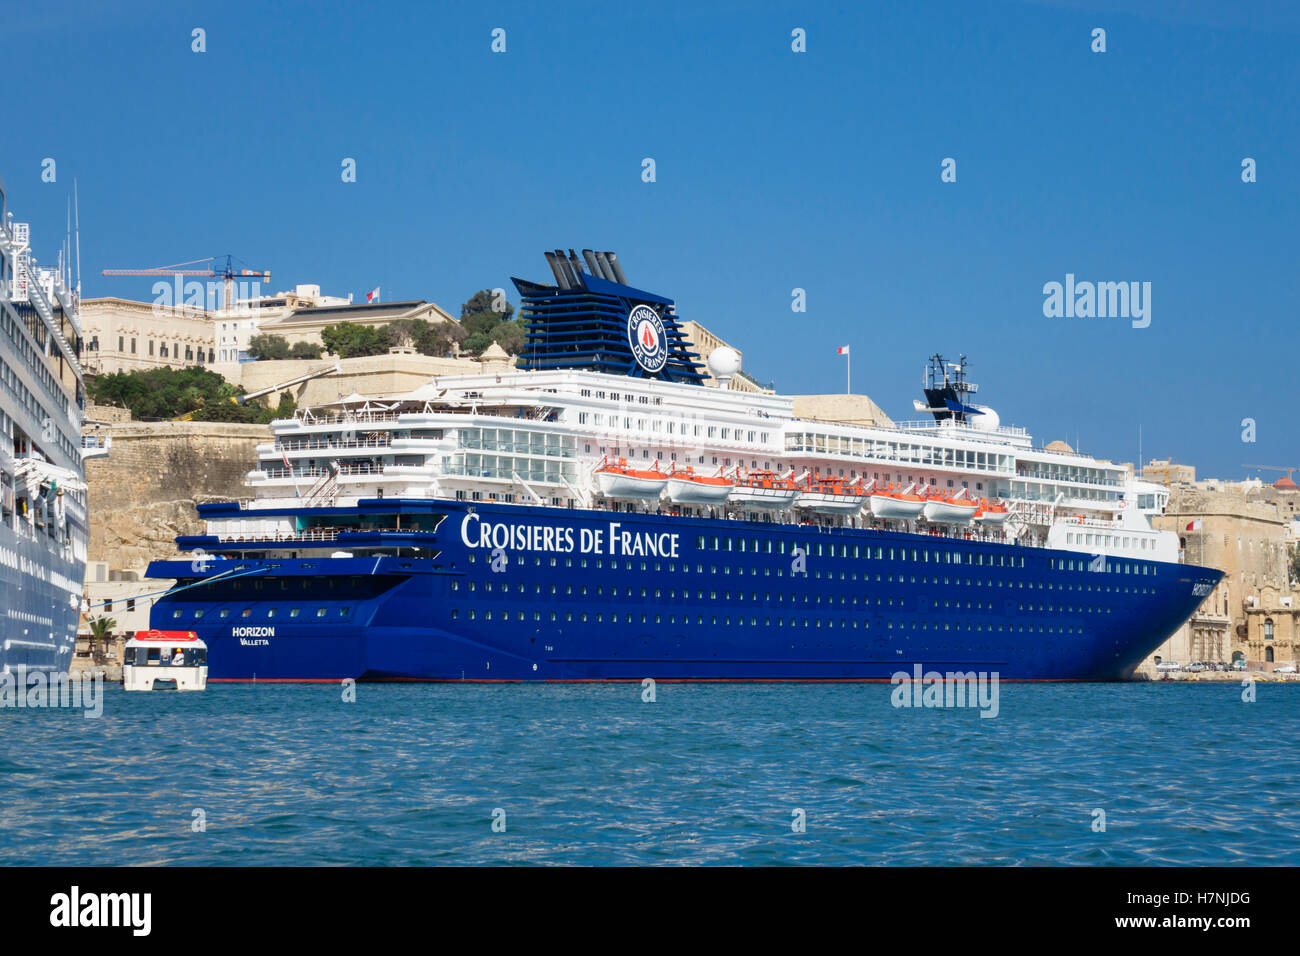 Malta- the Grand Harbour, Valletta. Cruise ship destination, boarding port and stop. Croisieres de France. Stock Photo